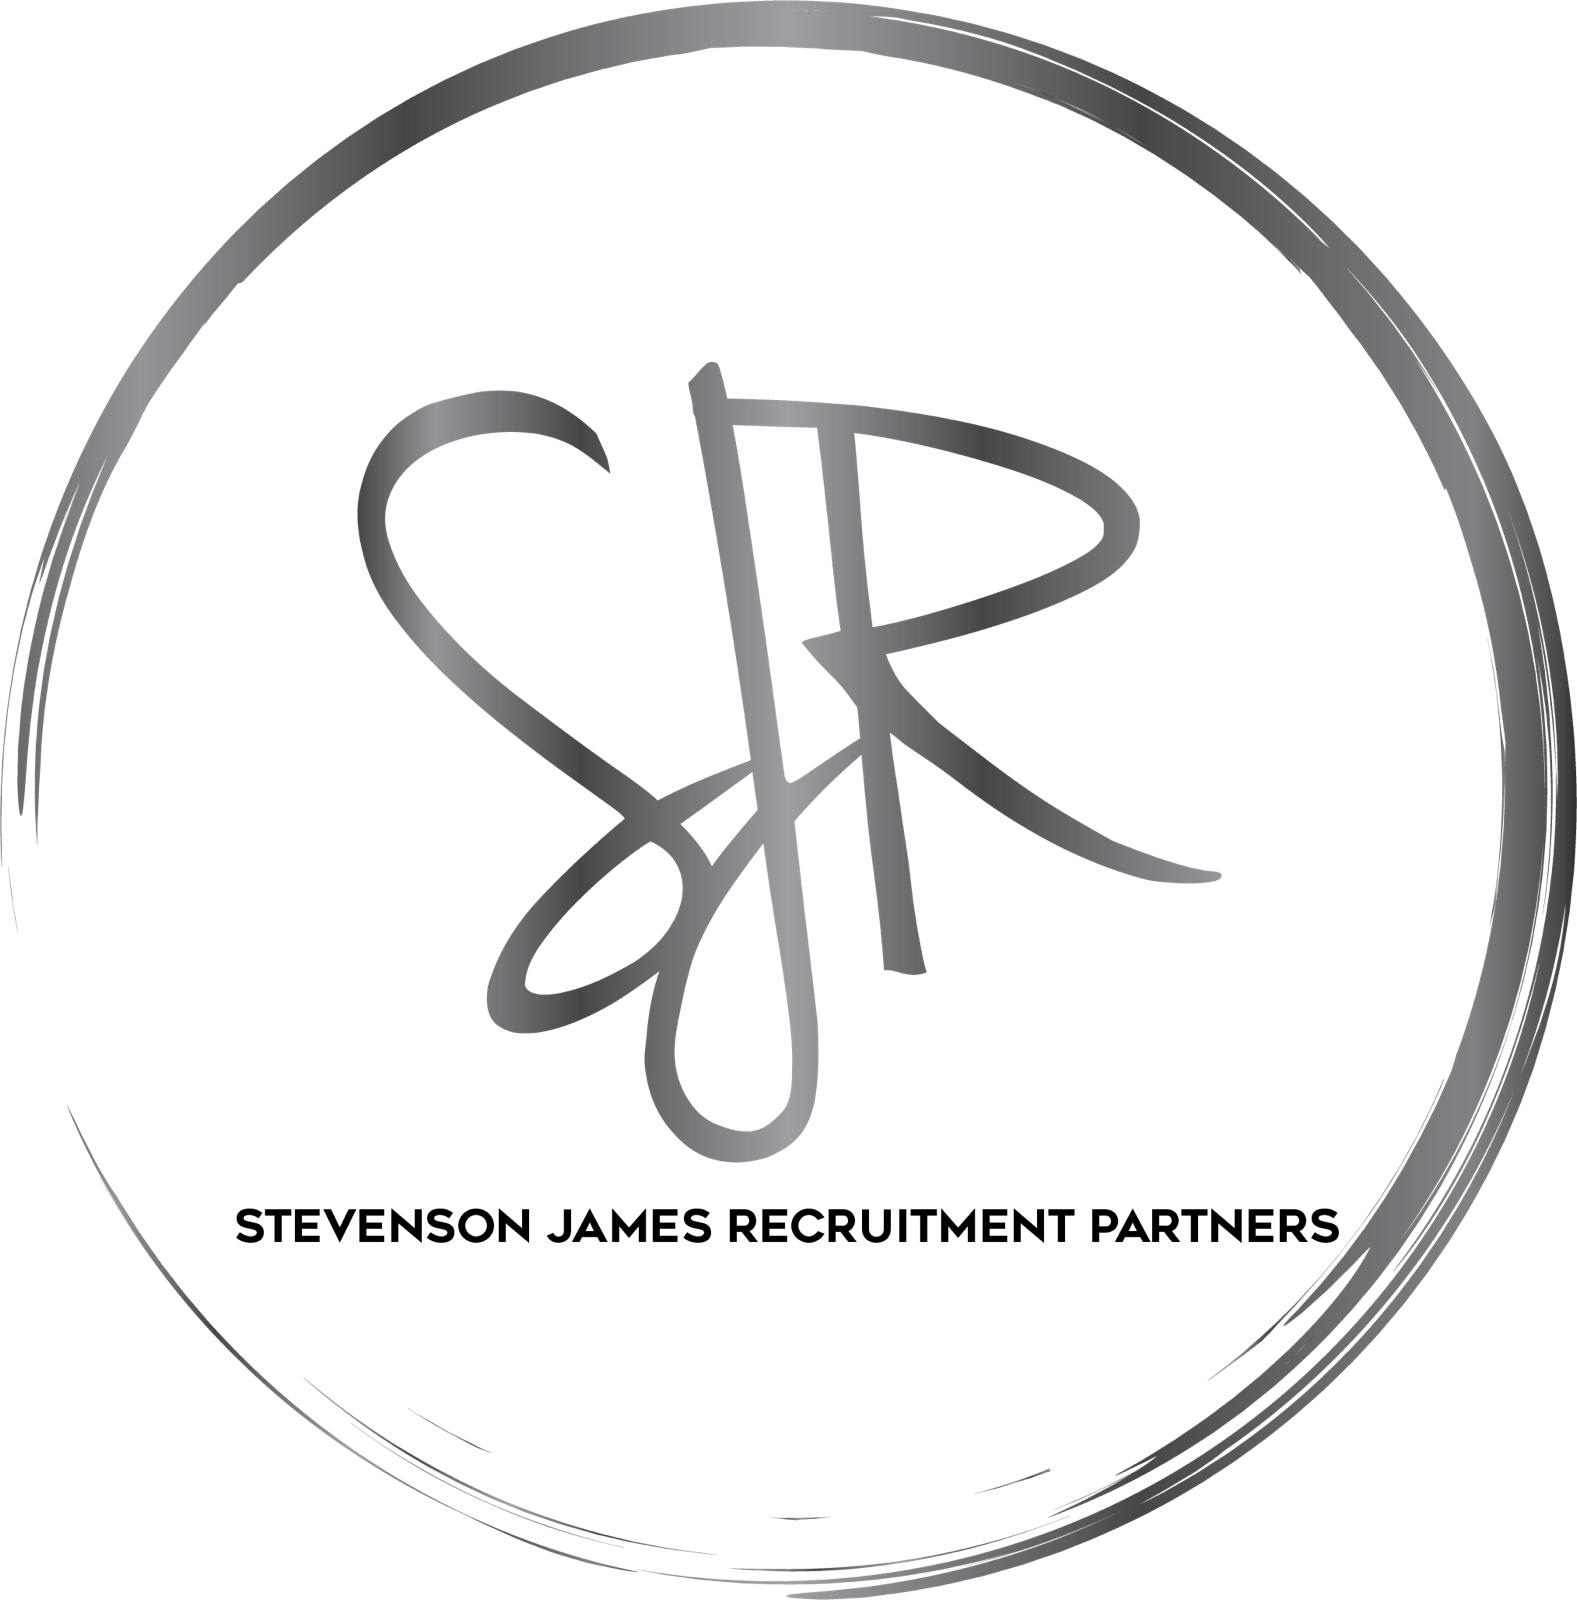 Stevenson James Recruitment Partners Limited